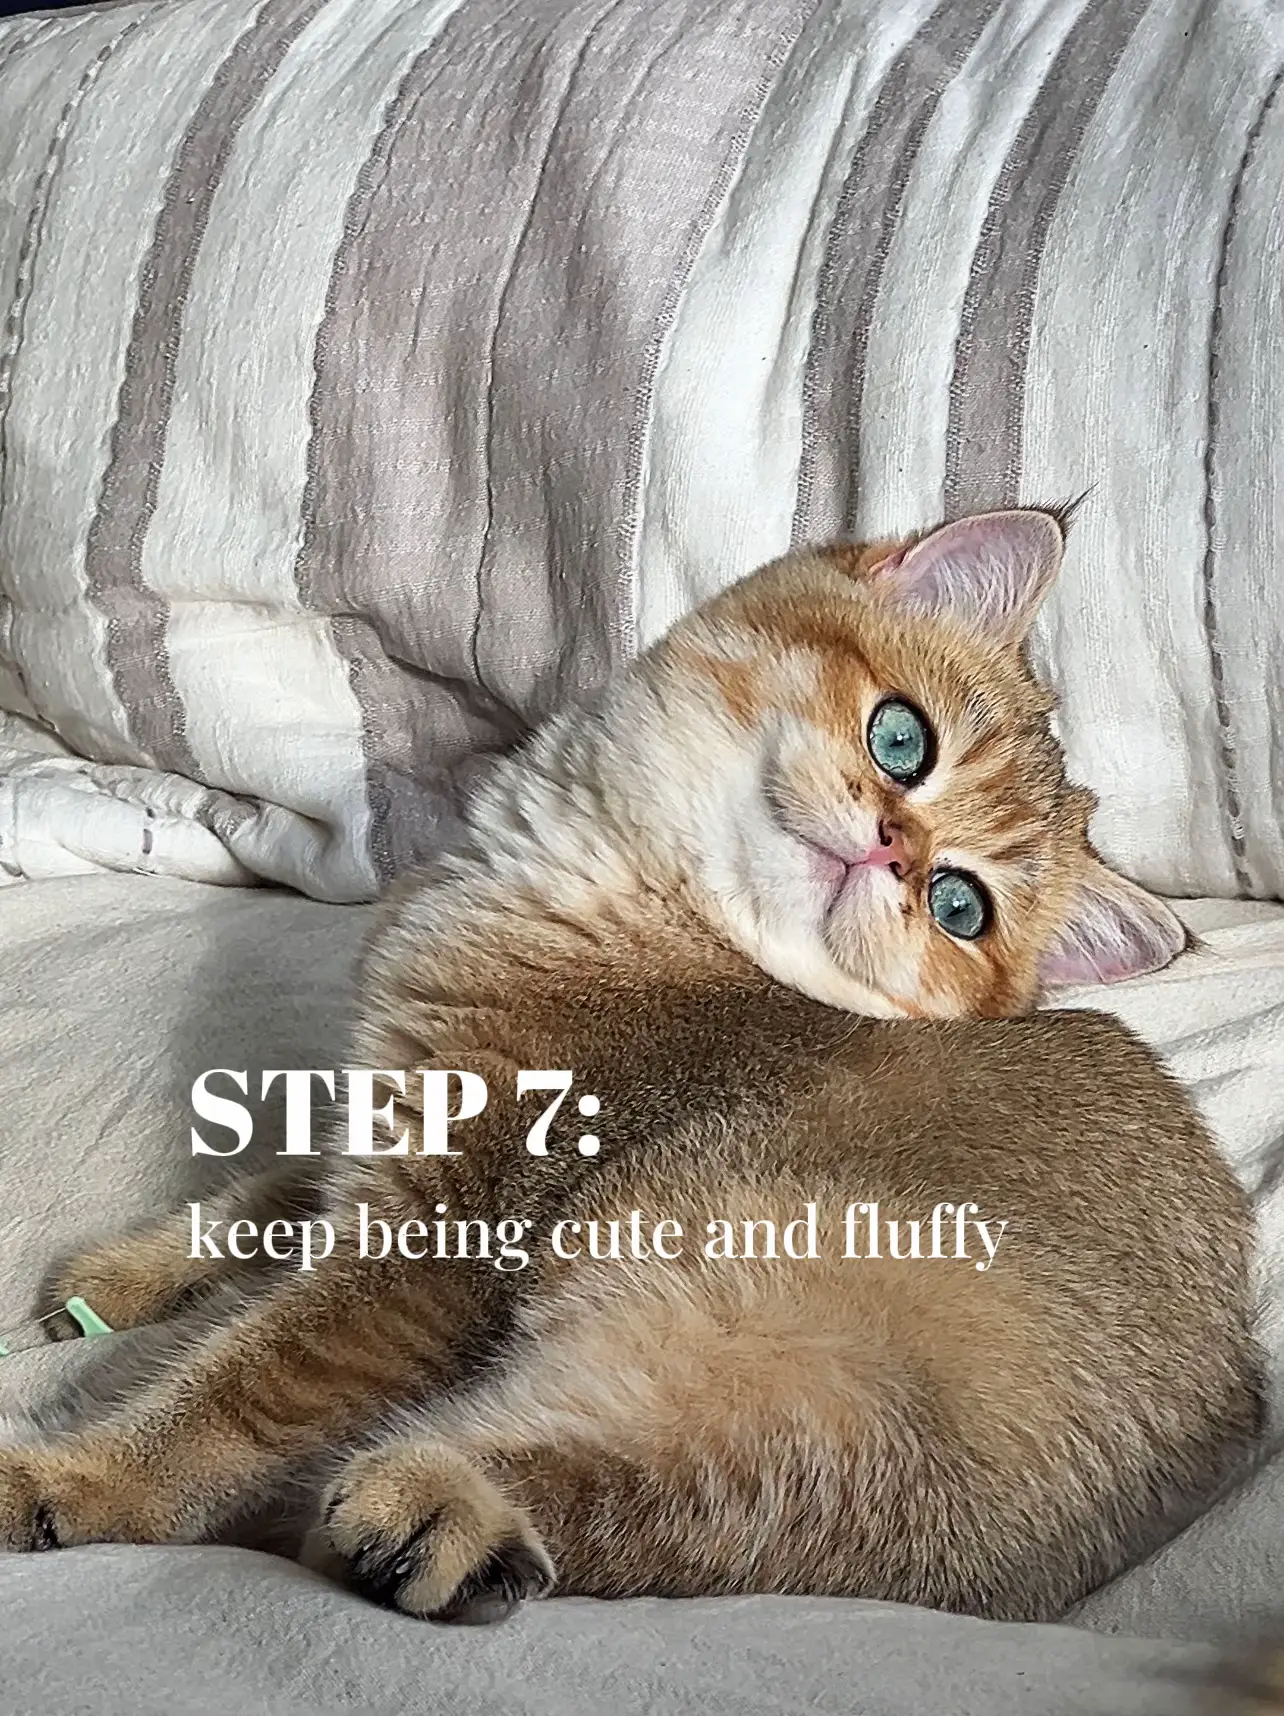 Aww super cutie cutie pie cat 🥹  Cute cats, Baby cats, Cute animals images